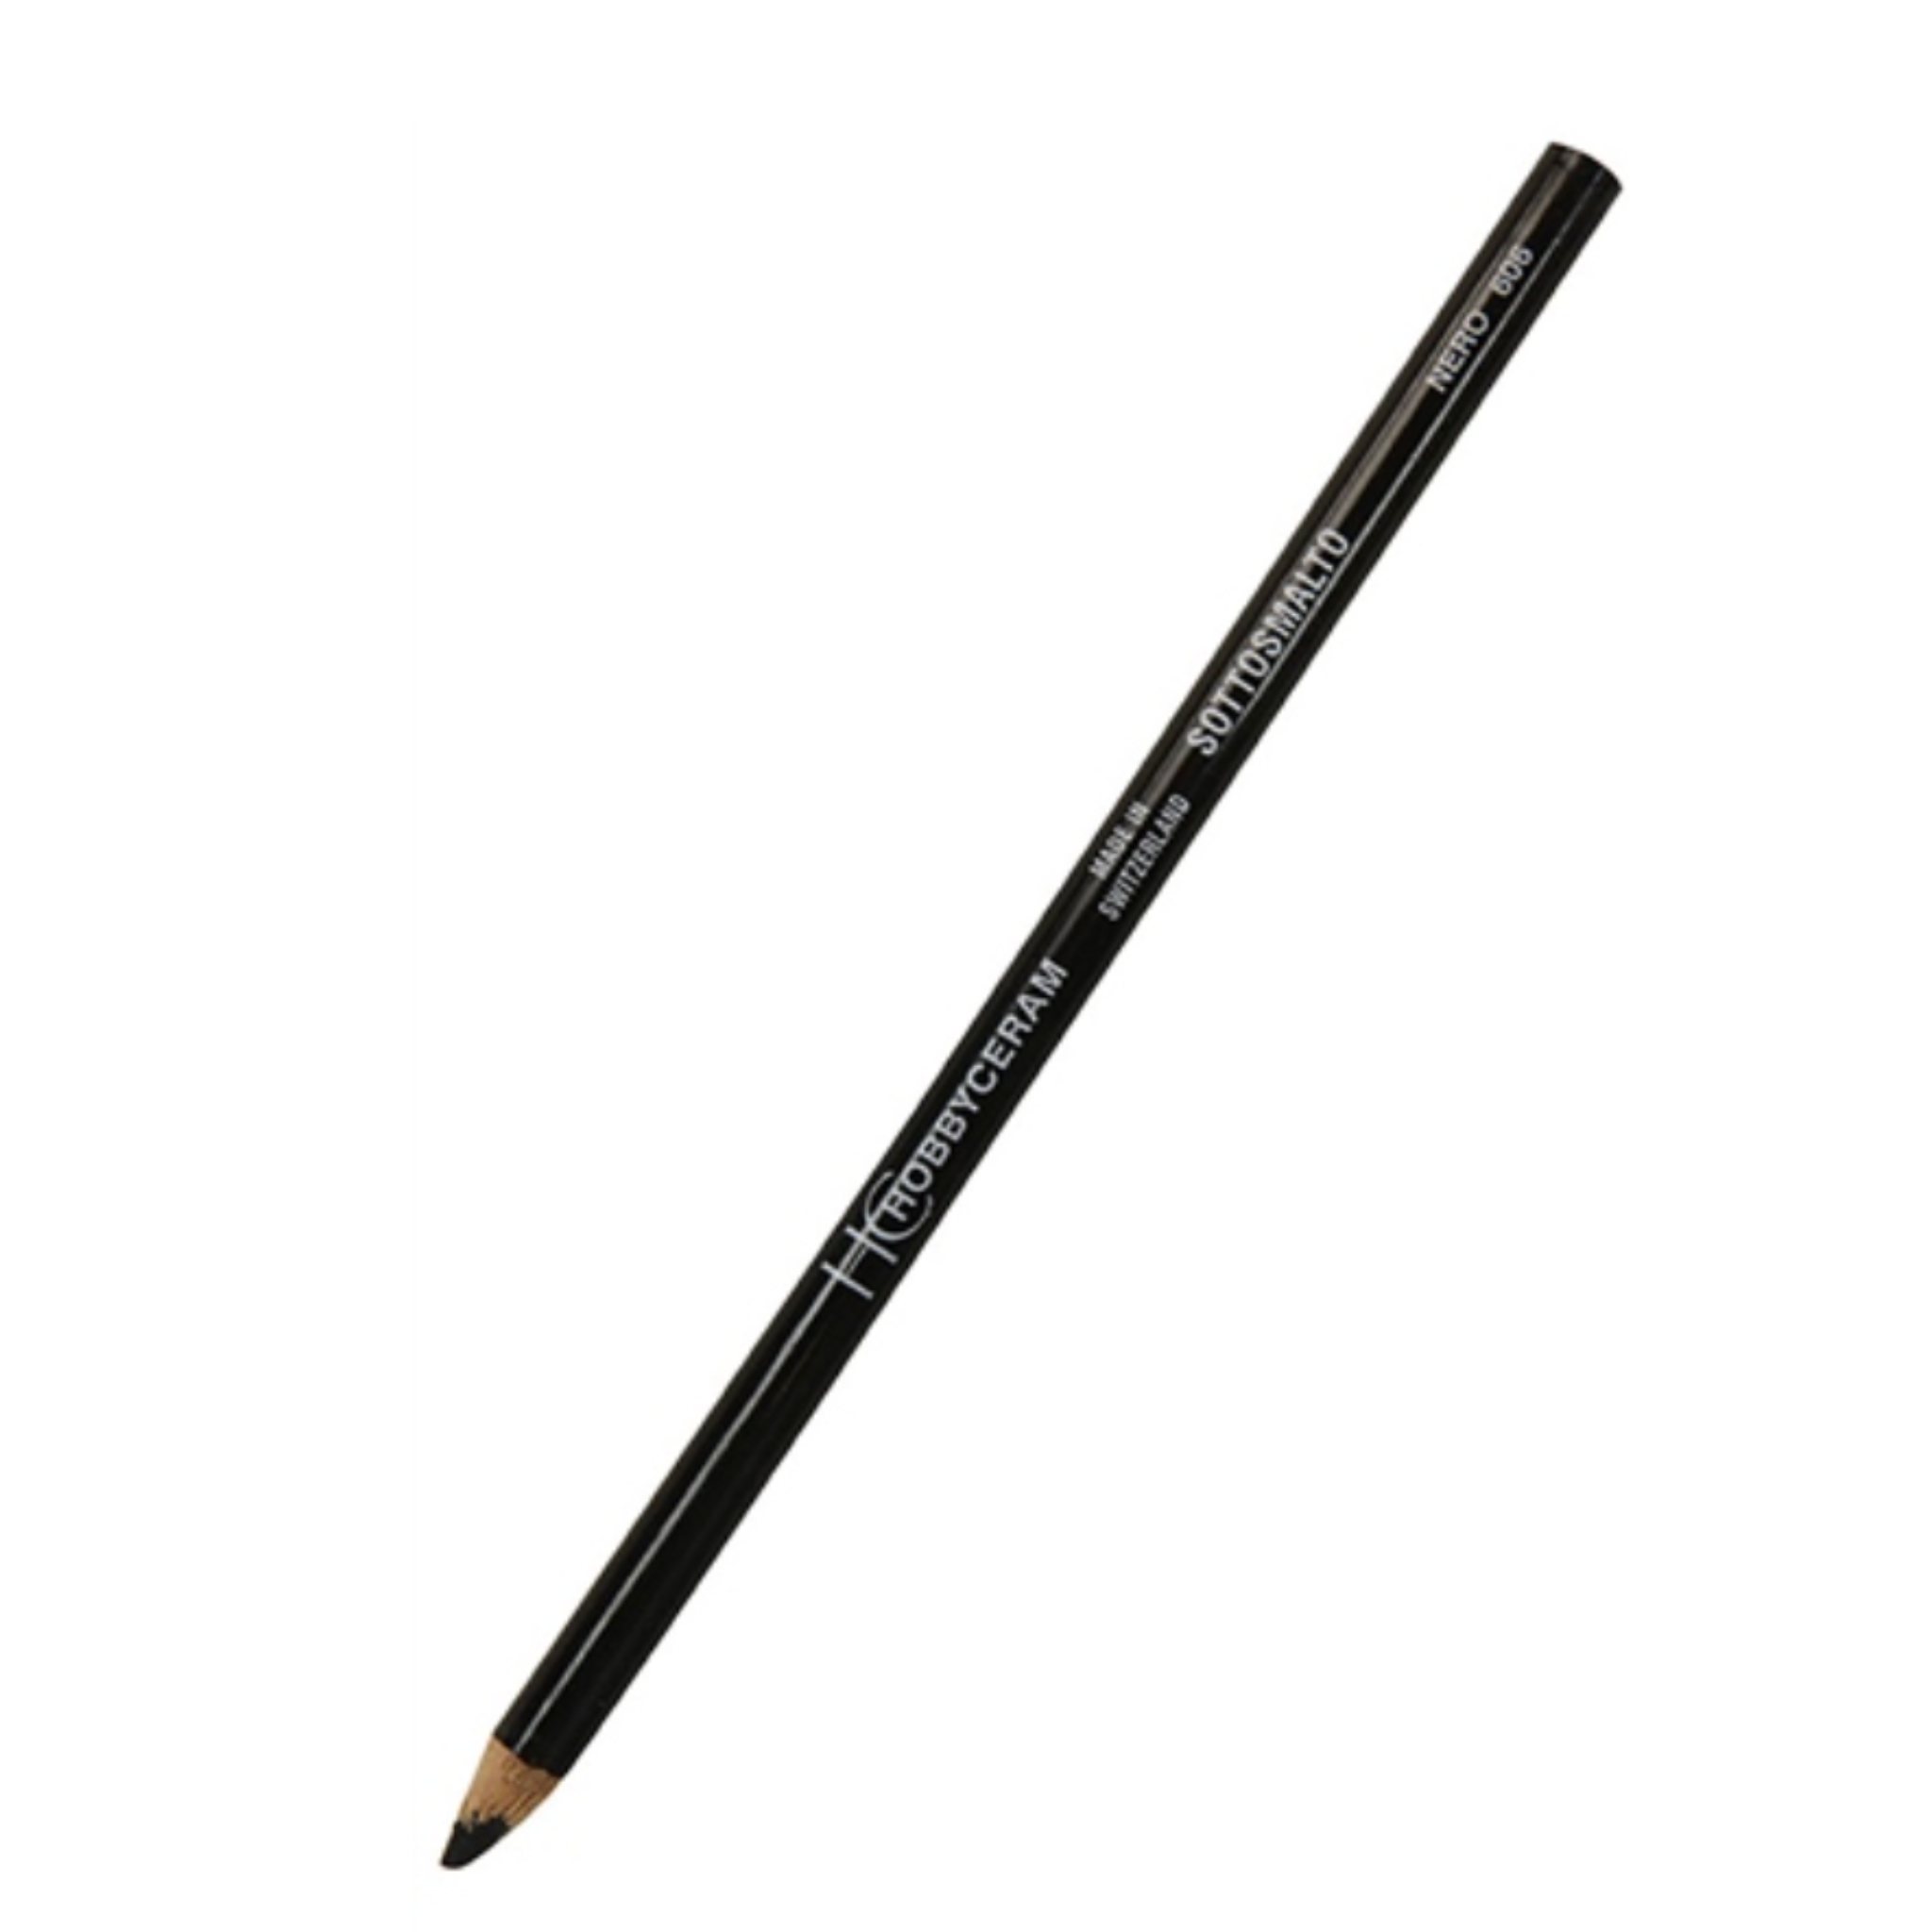 Hobbyceram Olive Underglaze Pencil 610 - Potclays